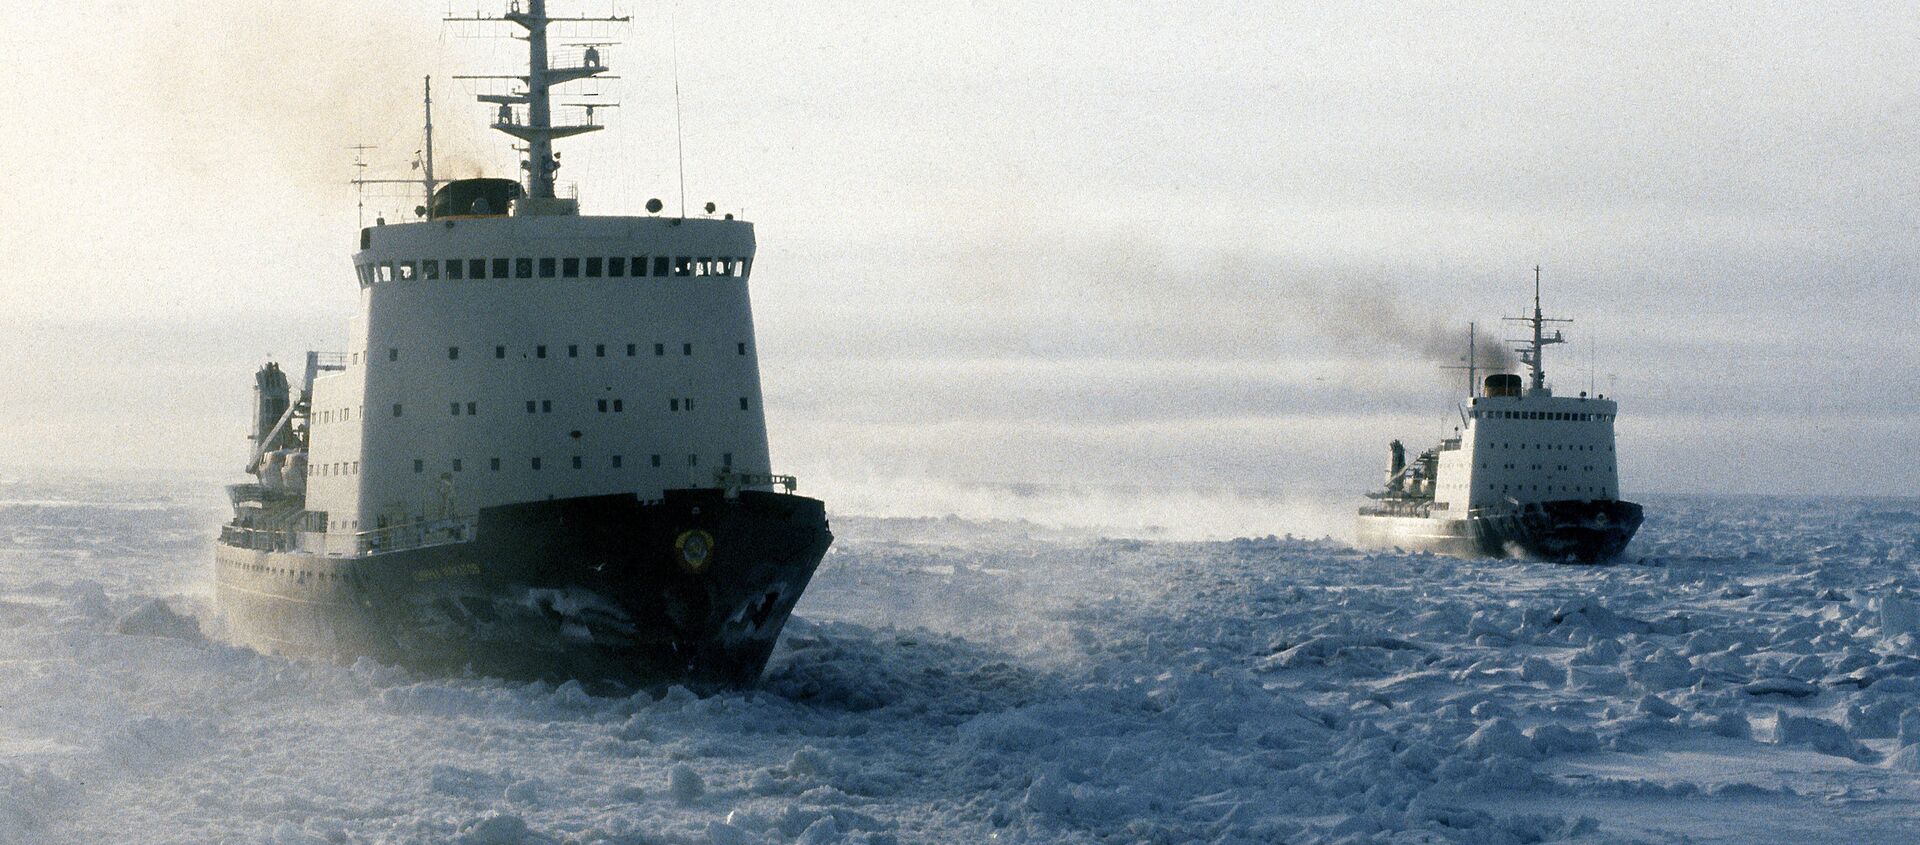 Soviet ice-breakers in the Chukchee Sea, the Arctic Ocean - Sputnik International, 1920, 14.09.2018